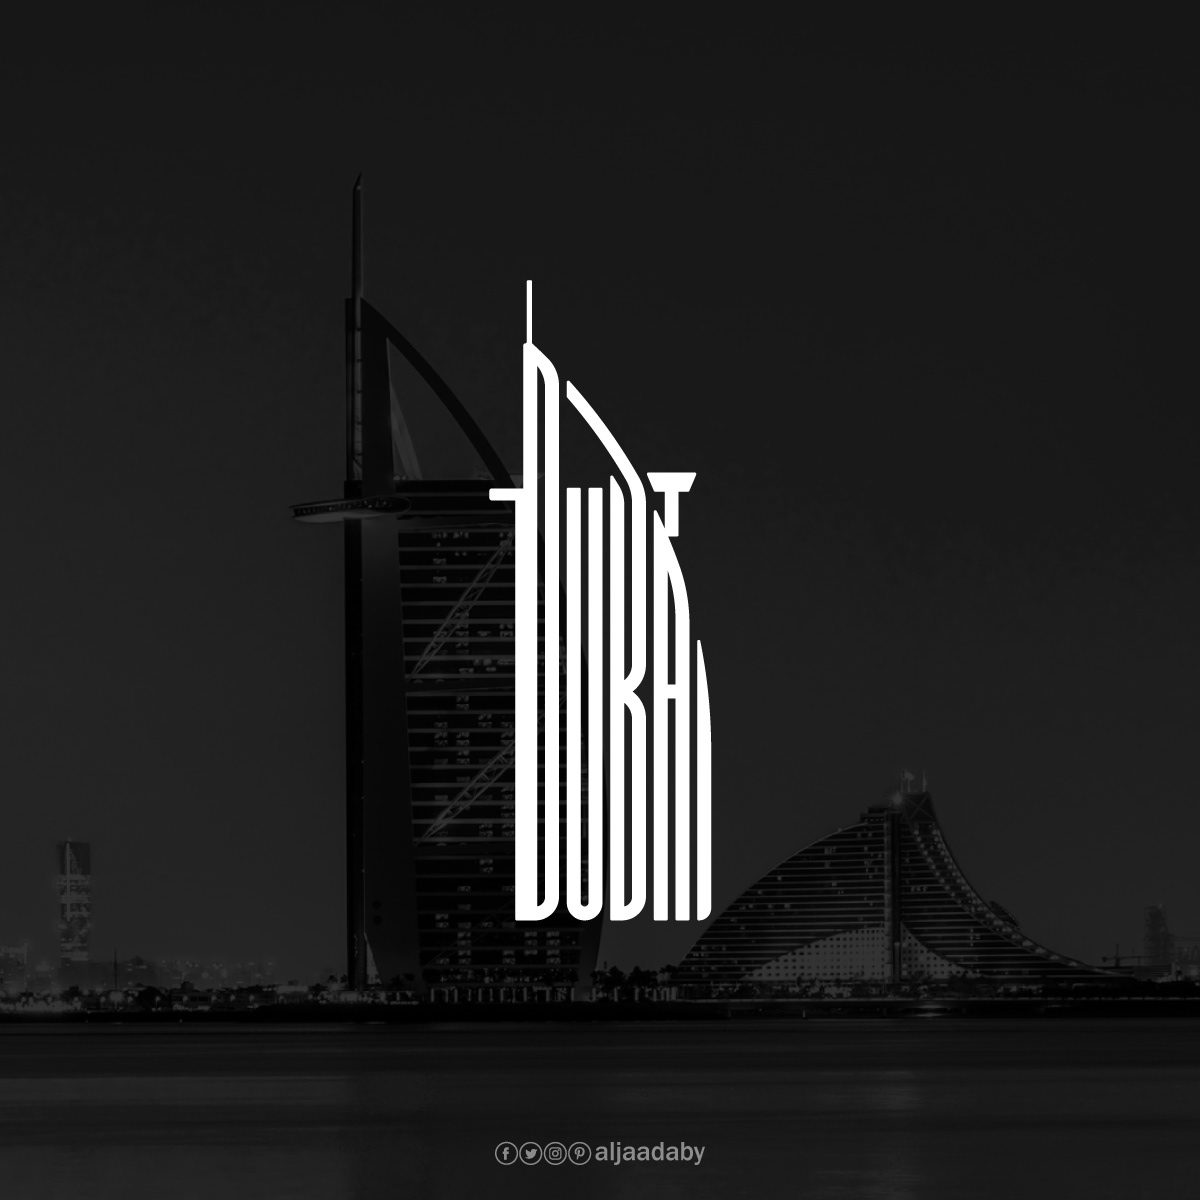 Typographic city logos based on their famous landmarks - Dubai (Burj Al Arab)